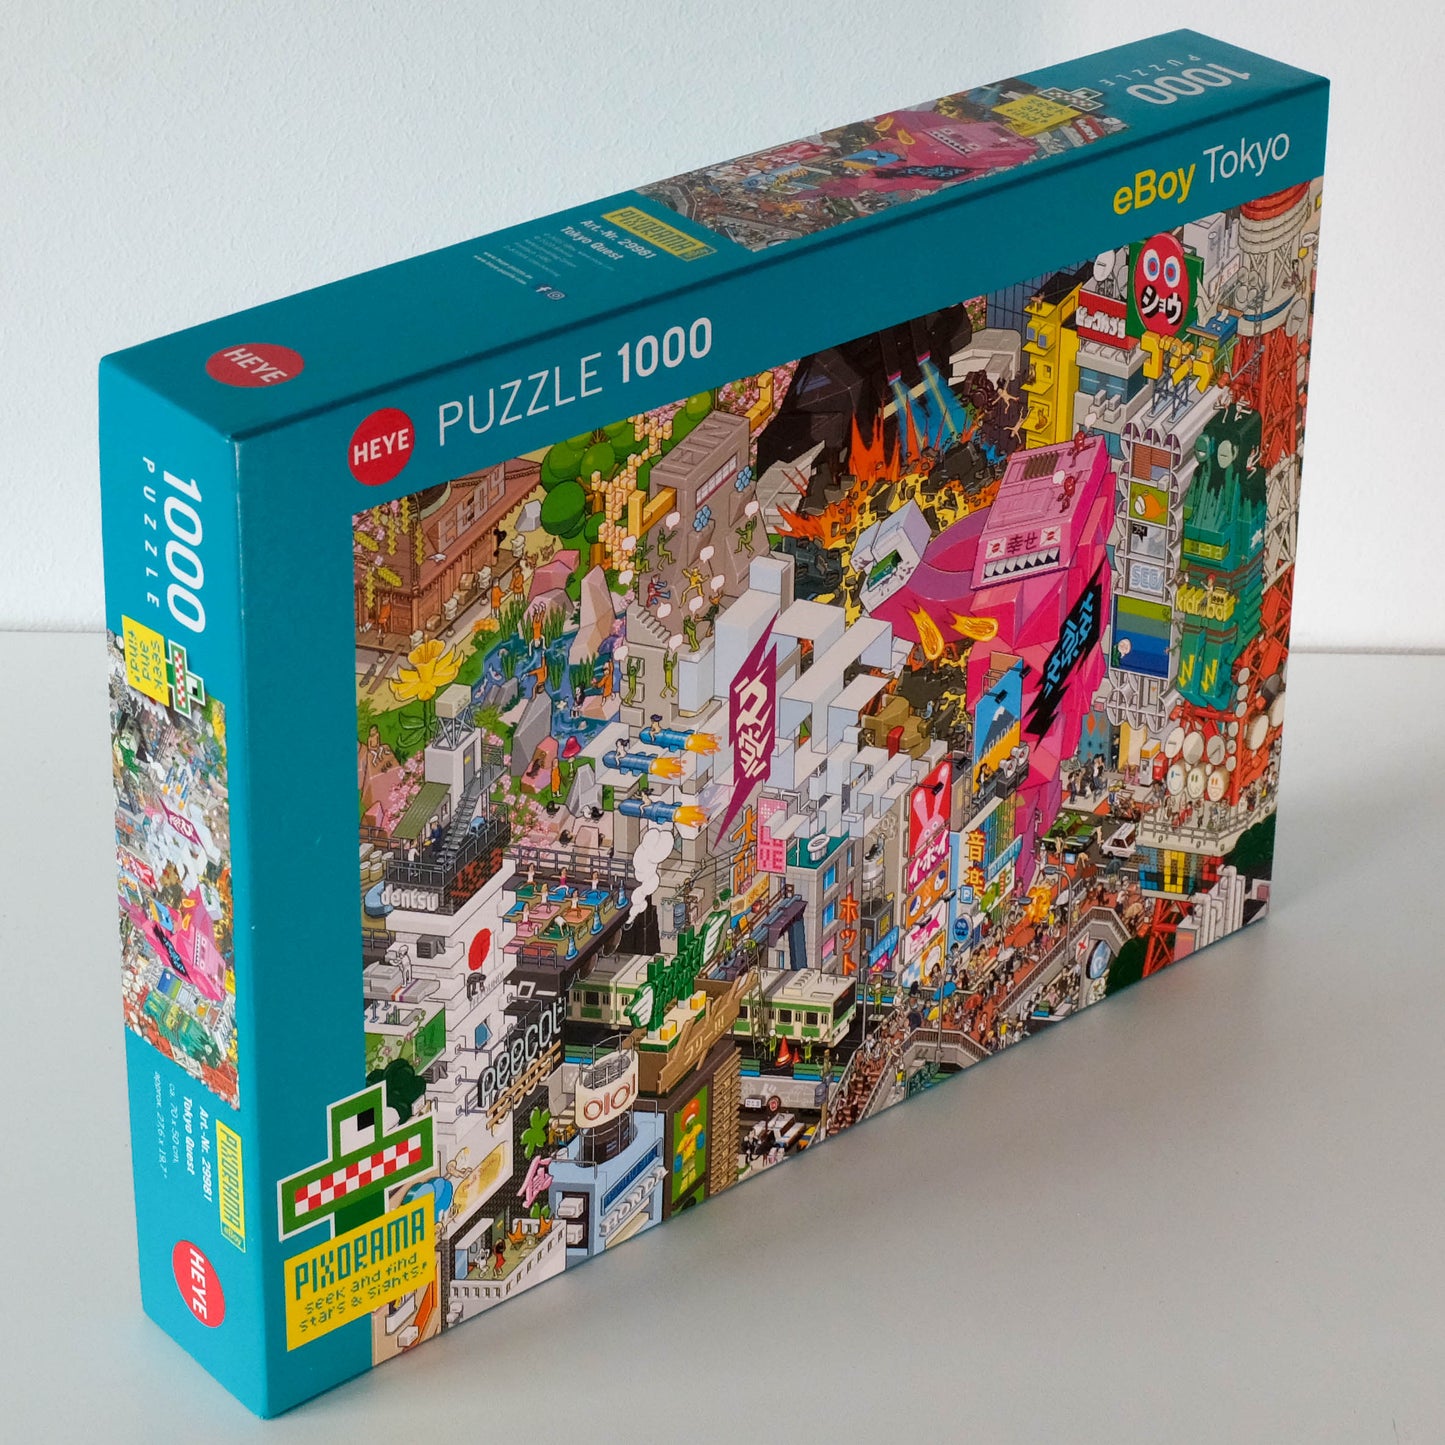 eBoy Pixel Art Puzzle of Tokyo